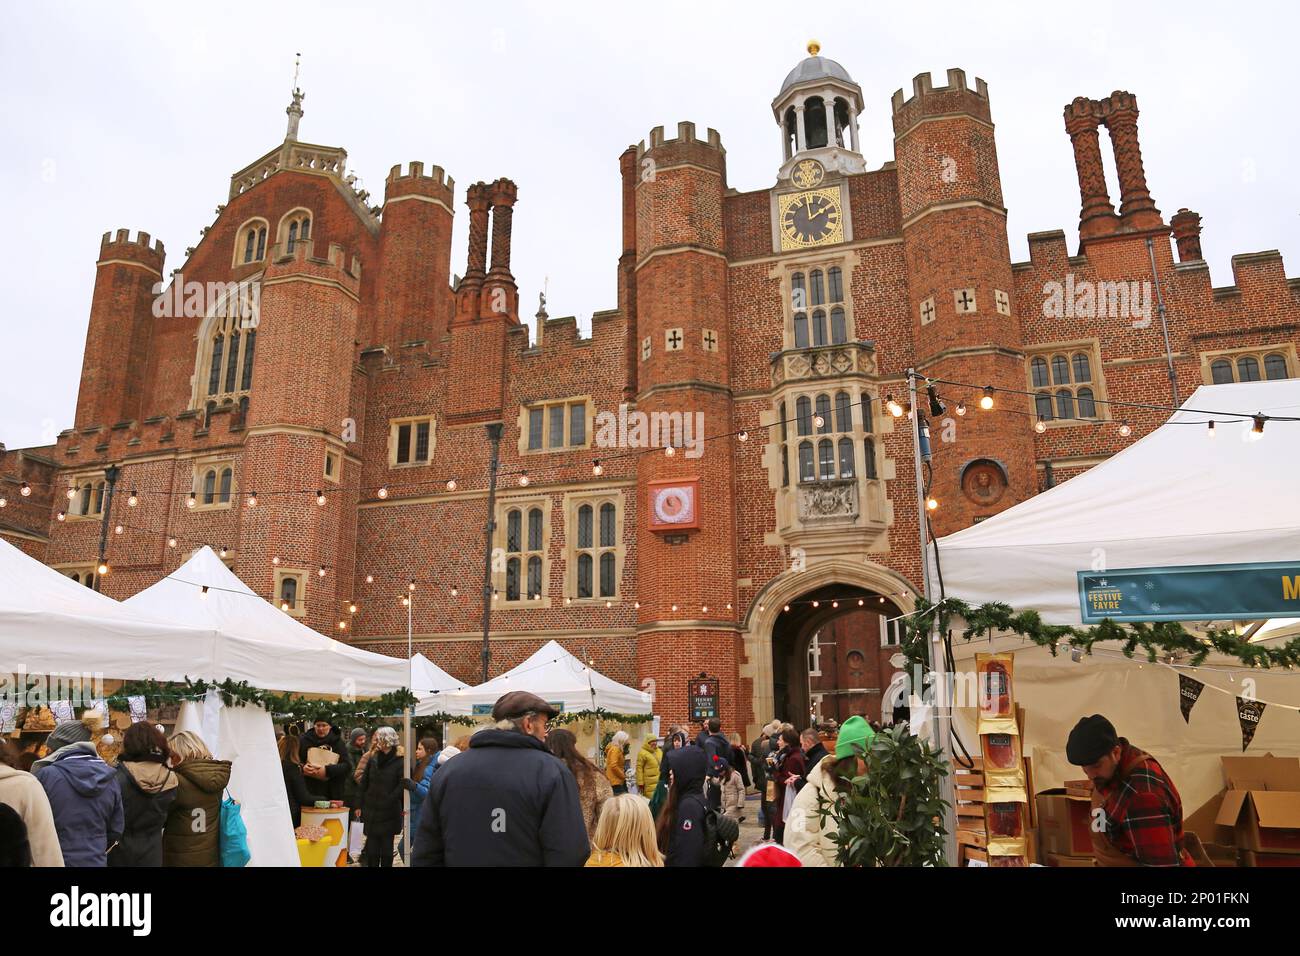 Base court, foire alimentaire festive, Hampton court Palace, East Molesey, Surrey, Angleterre, Grande-Bretagne, Royaume-Uni, Royaume-Uni, Europe Banque D'Images